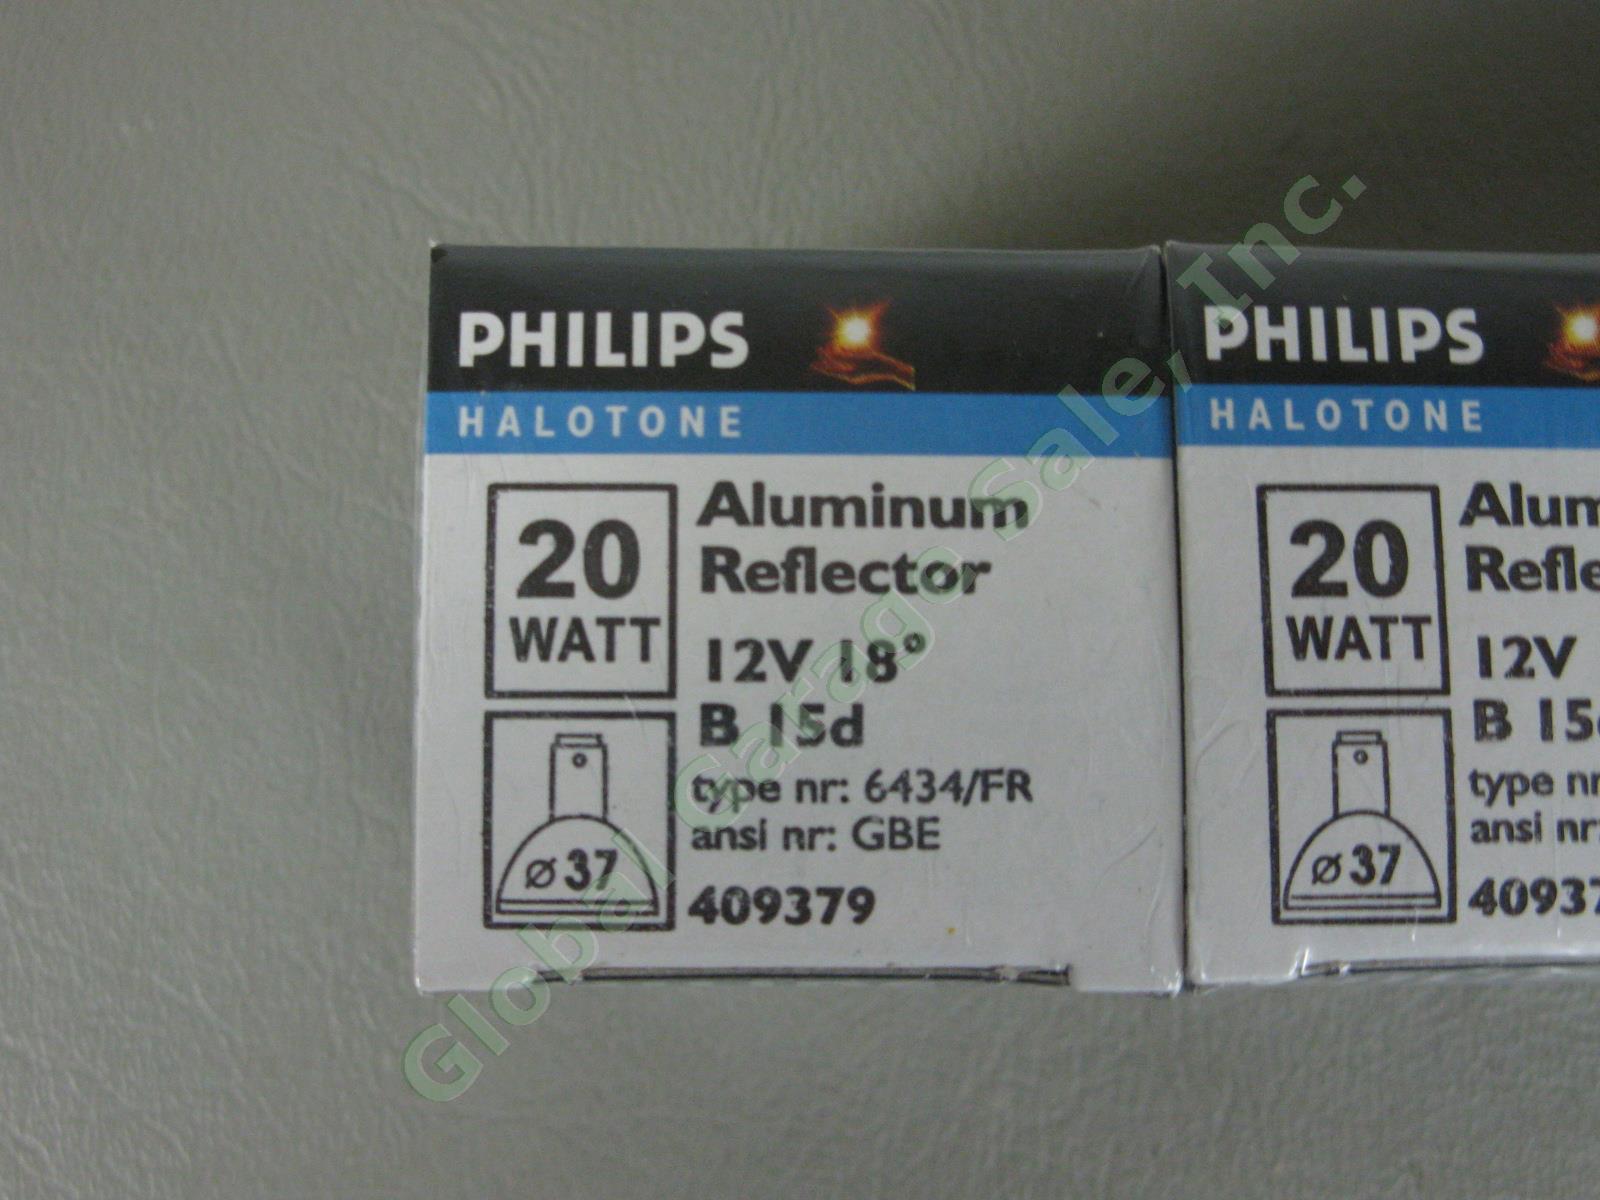 50 NEW Philips Halotone Light Bulb Lot 20w 12v UV Block 6434/FR Frosted 18° NR 4